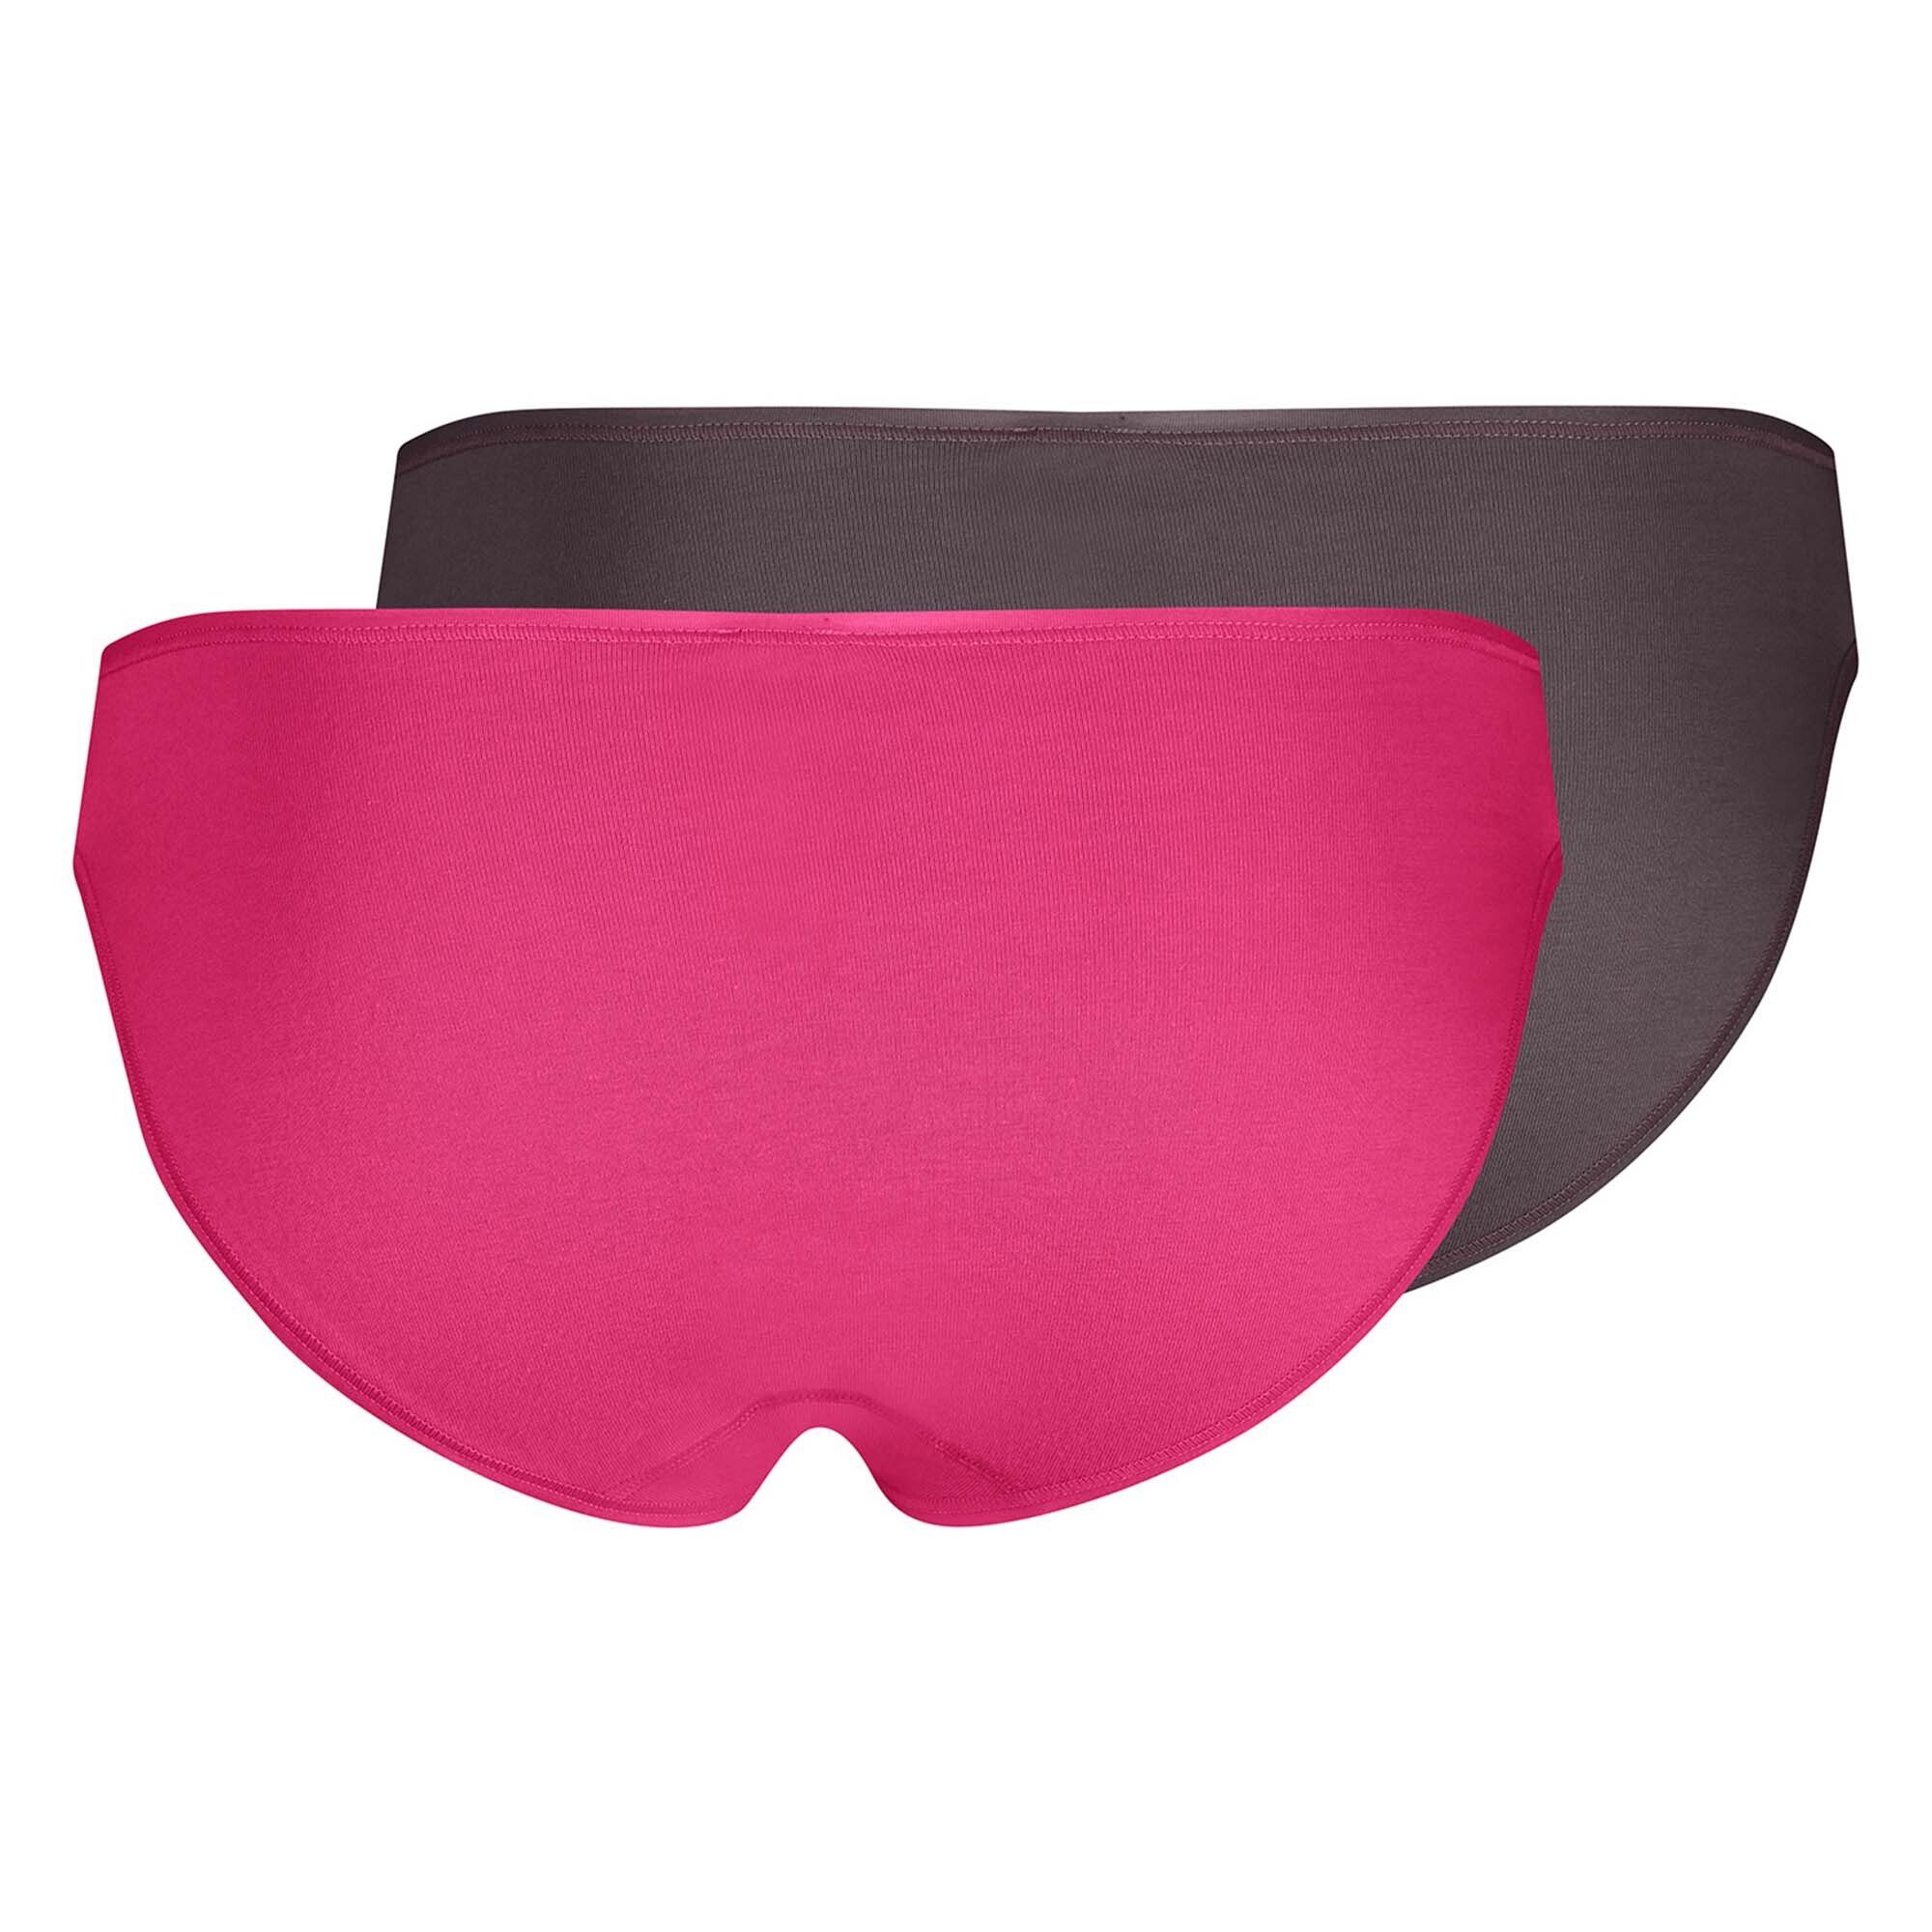 Skiny Slip, 2er Cotton Bikini Pink/Taupe Rio Pack Slip, Slip - Damen